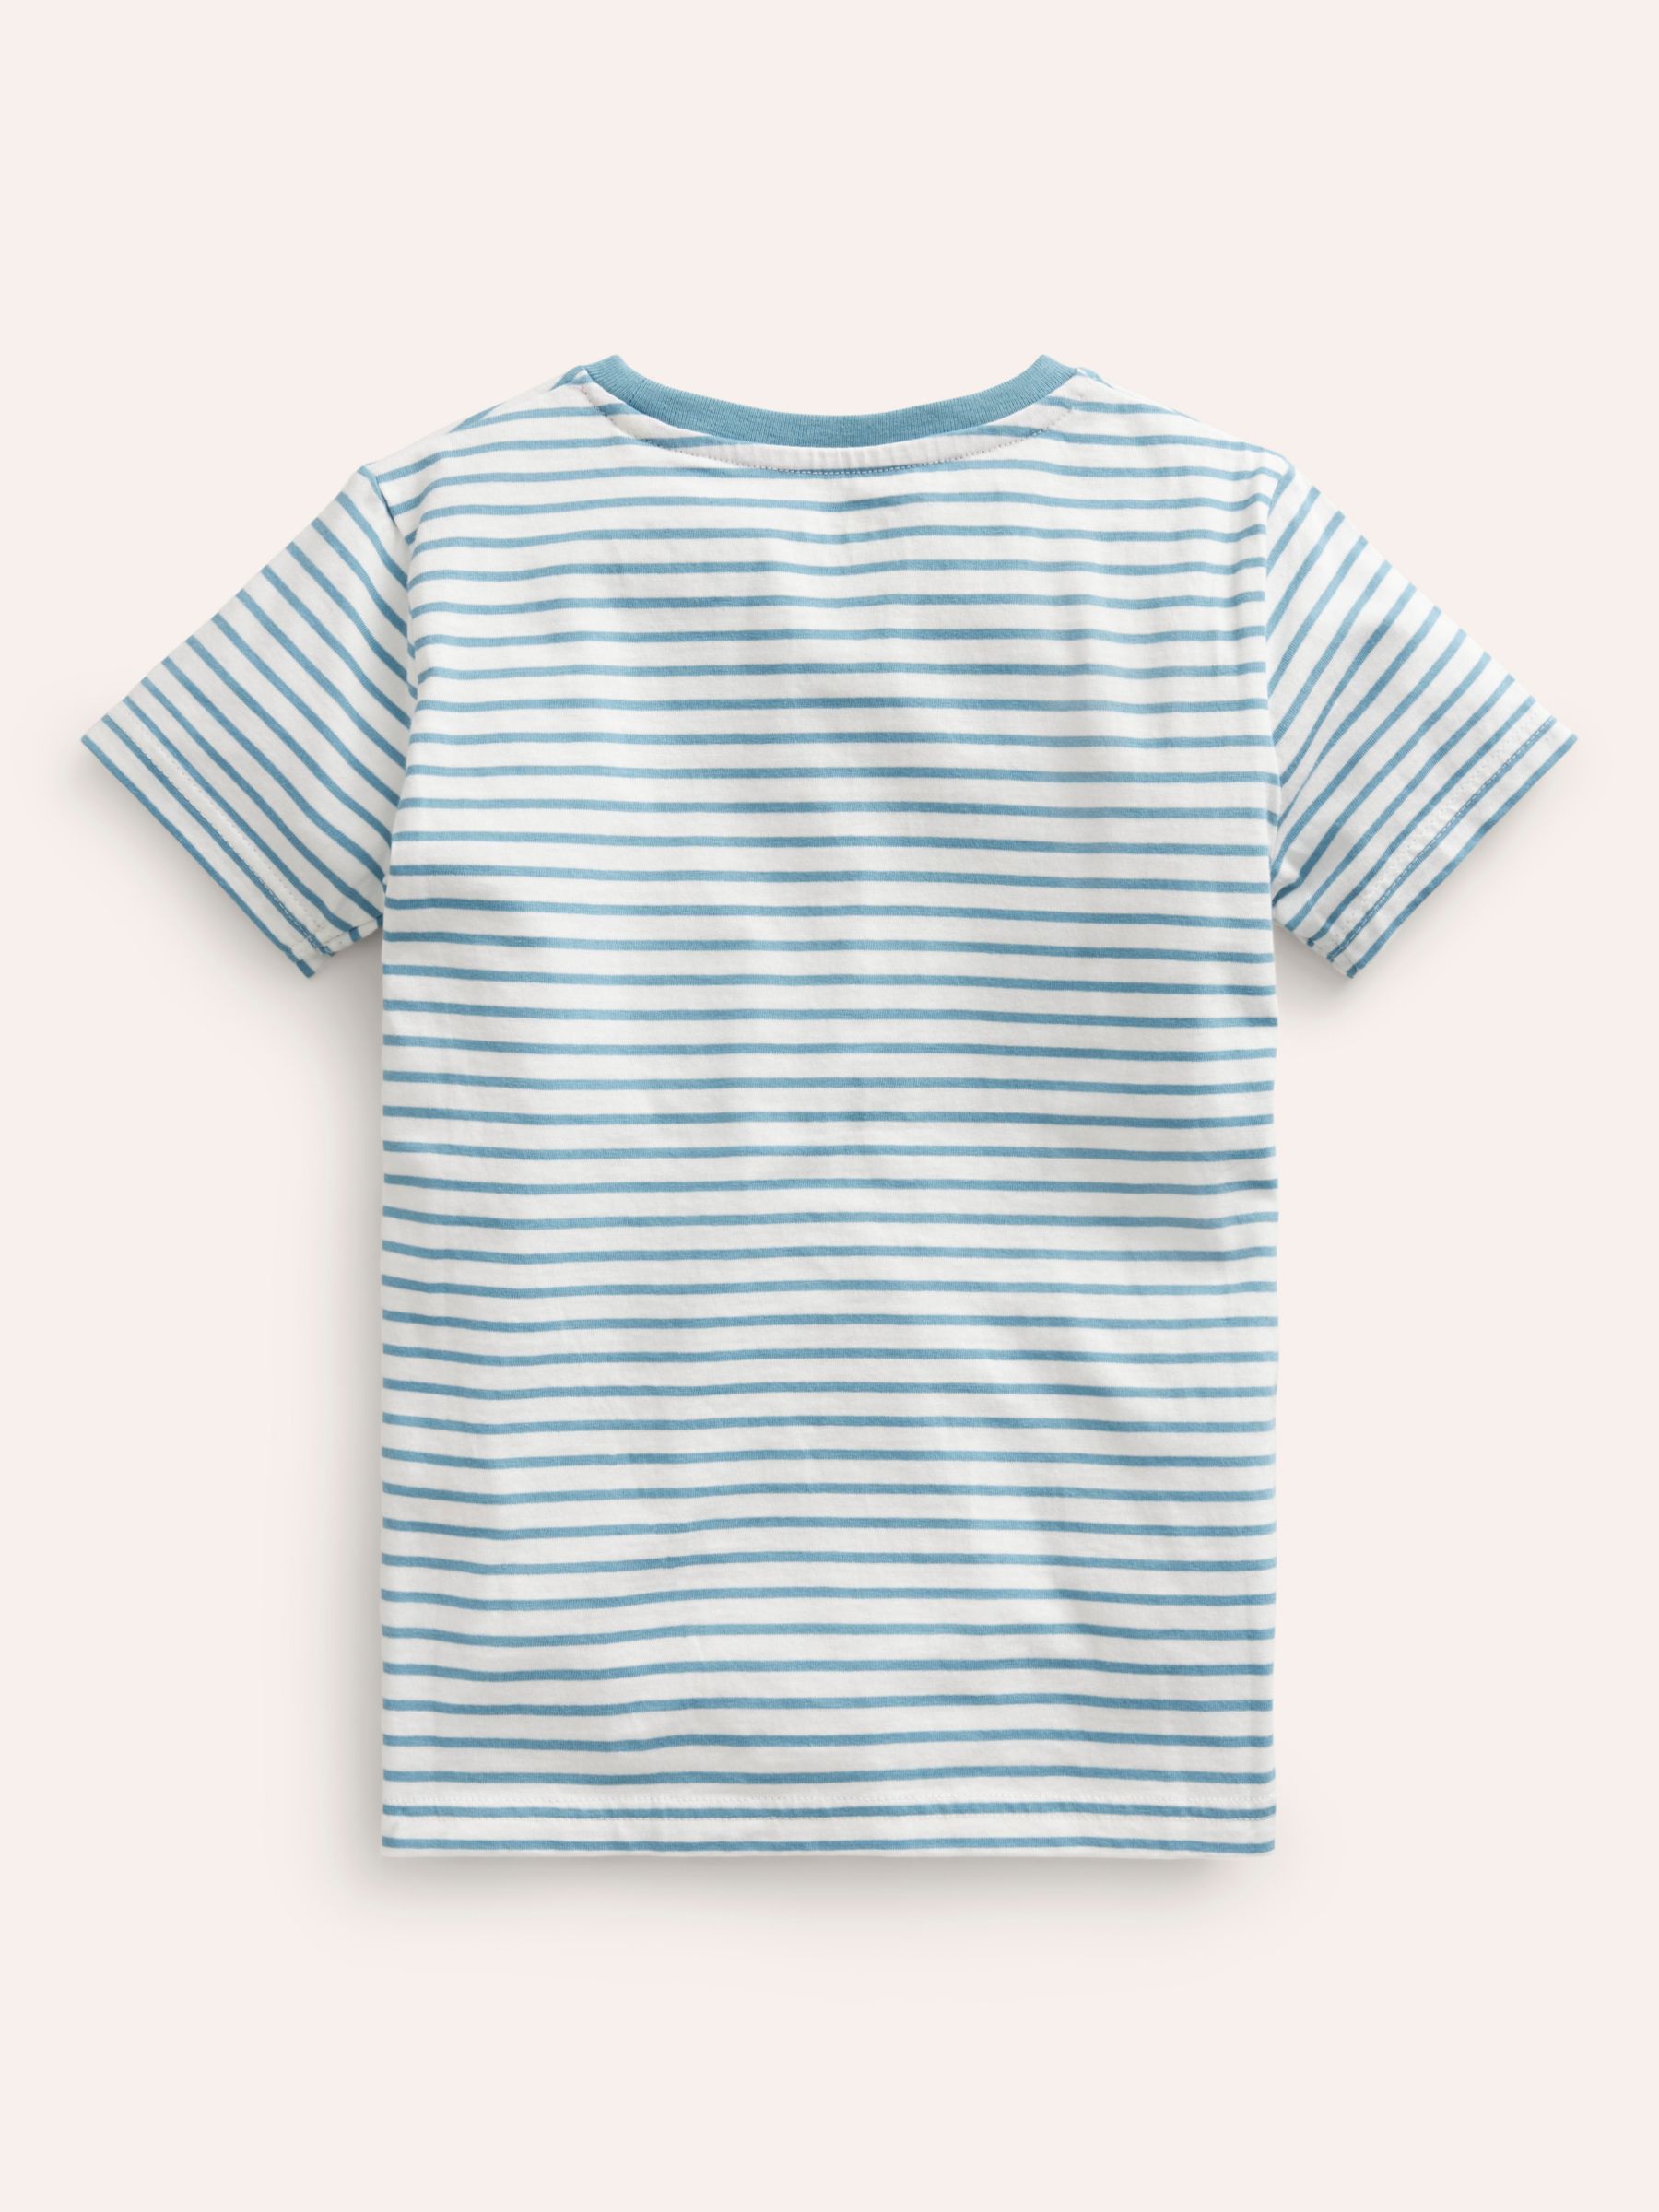 Mini Boden Kids' Embroidered Stripe T-Shirt, Blue/Ivory Rocket, 8-9Y